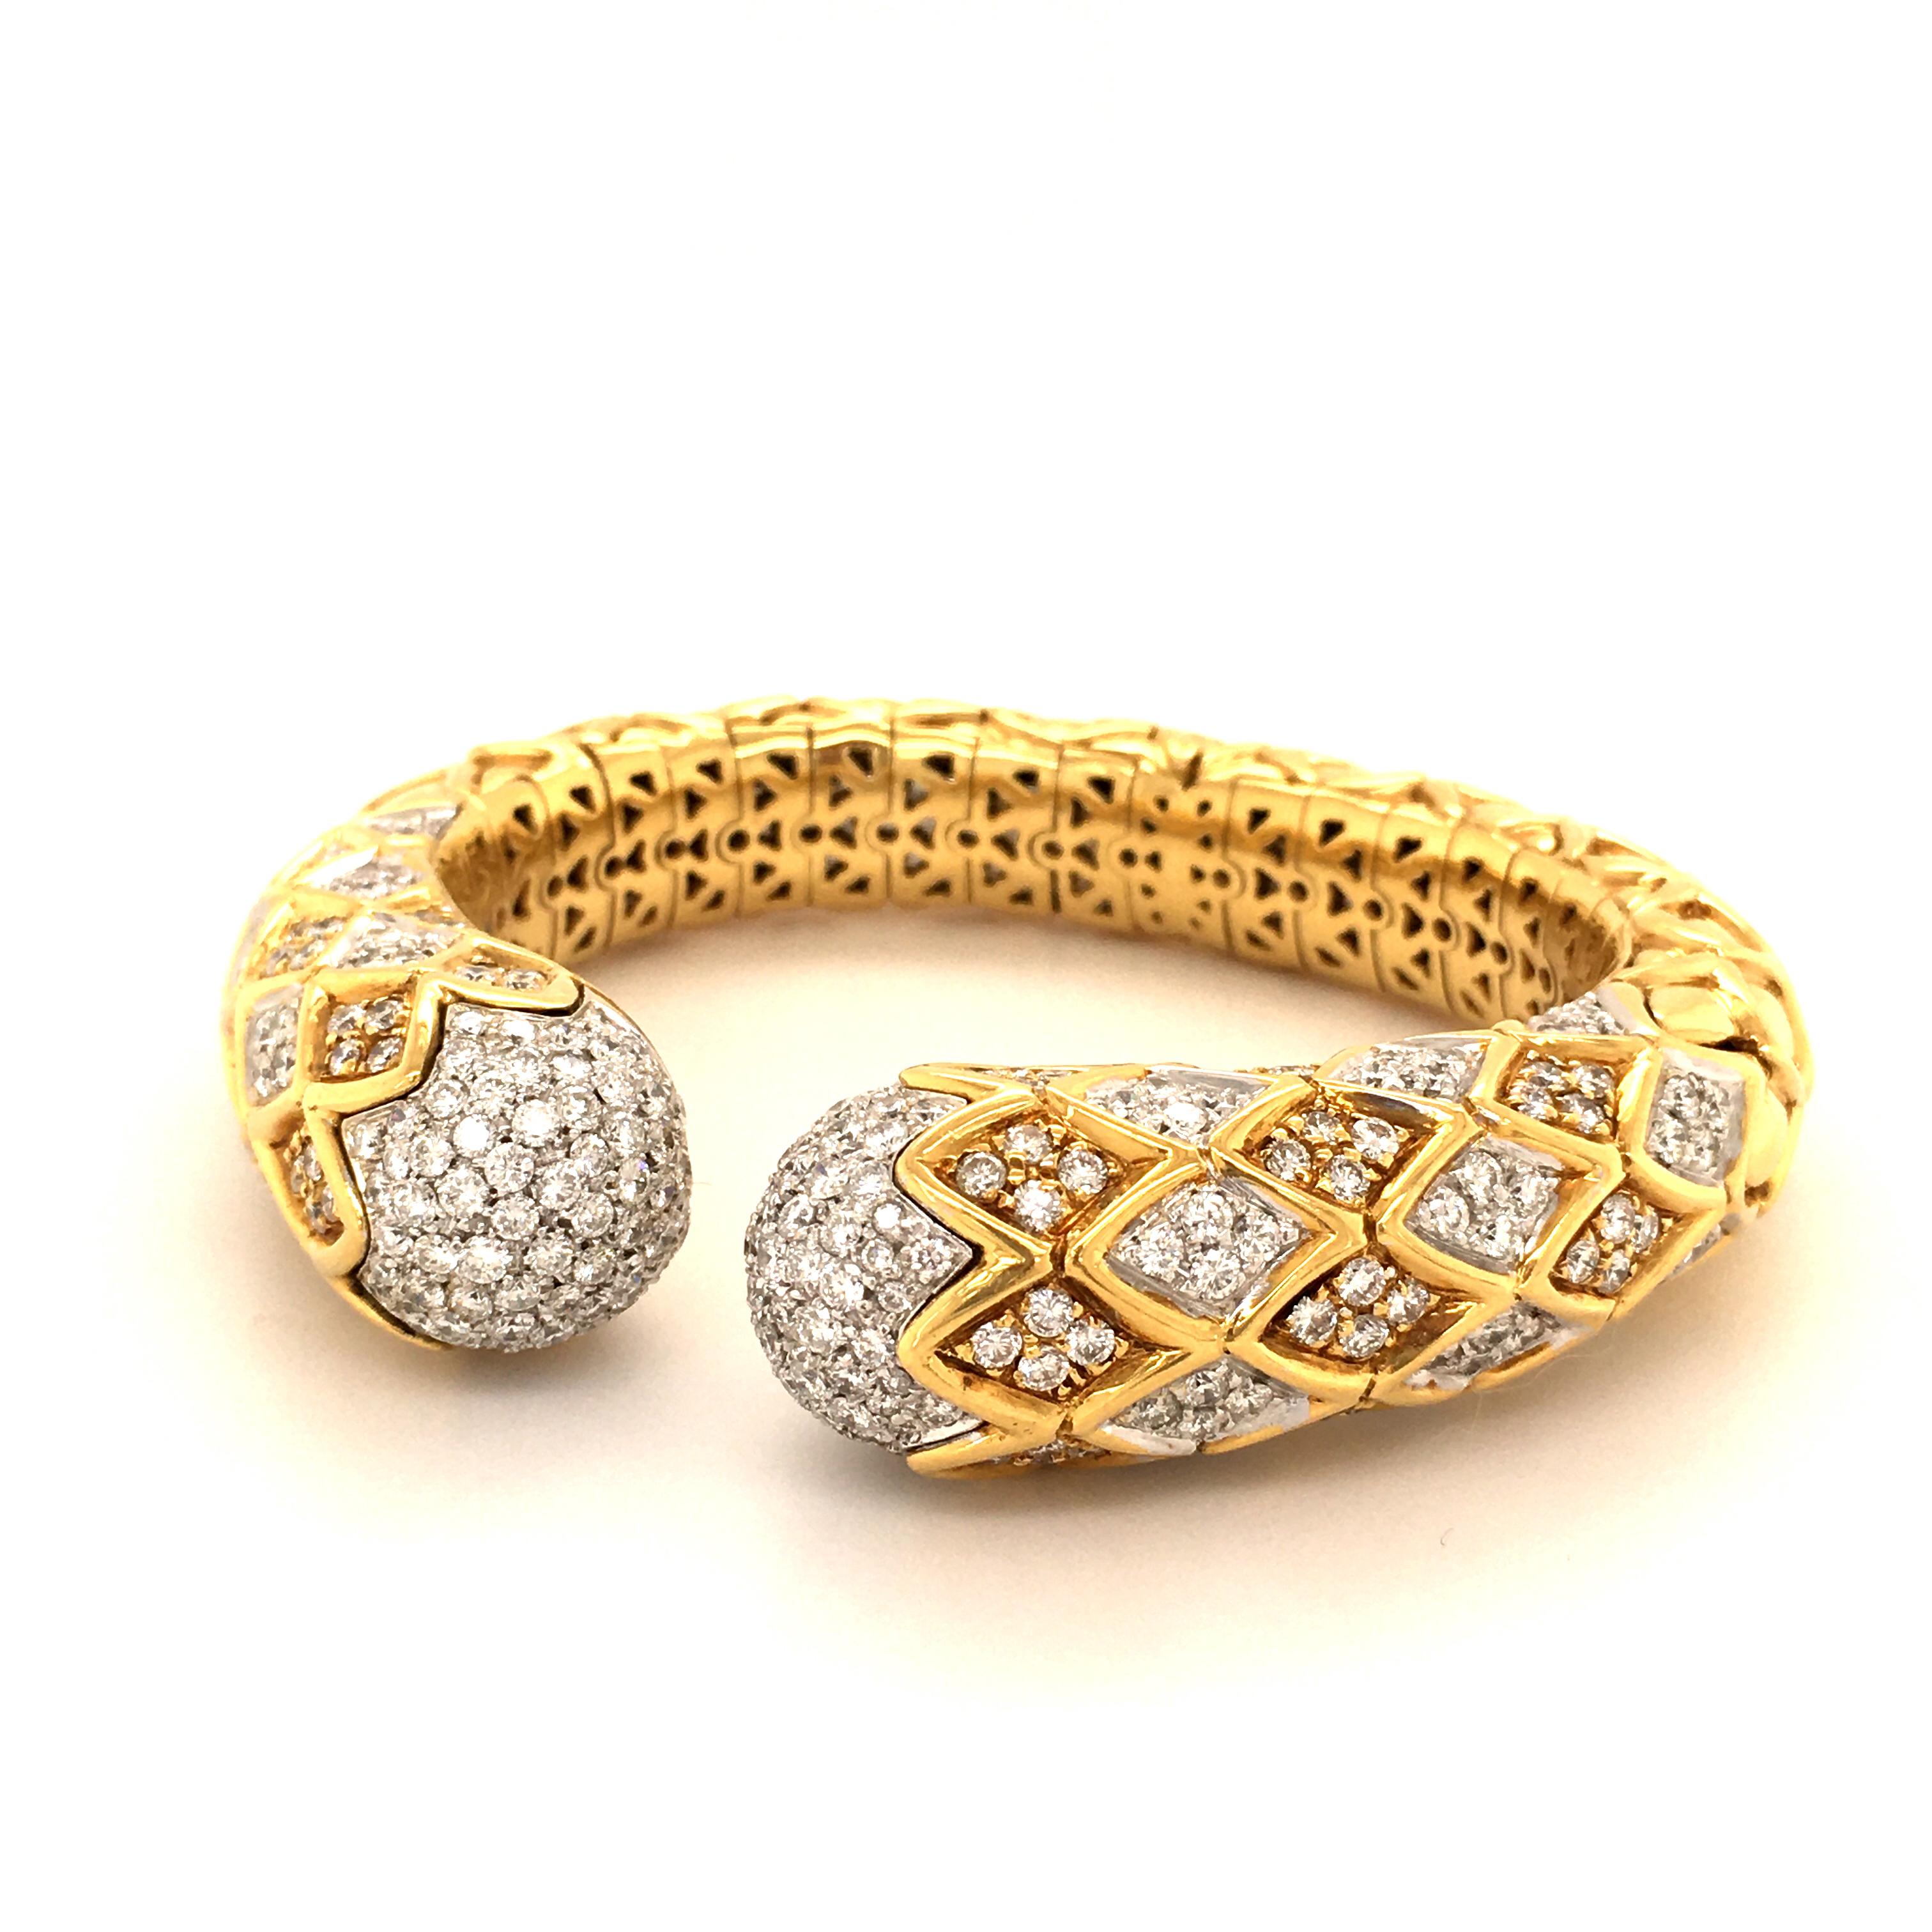 Brilliant Cut Diamond Bangle in White and Yellow Gold 18 Karat